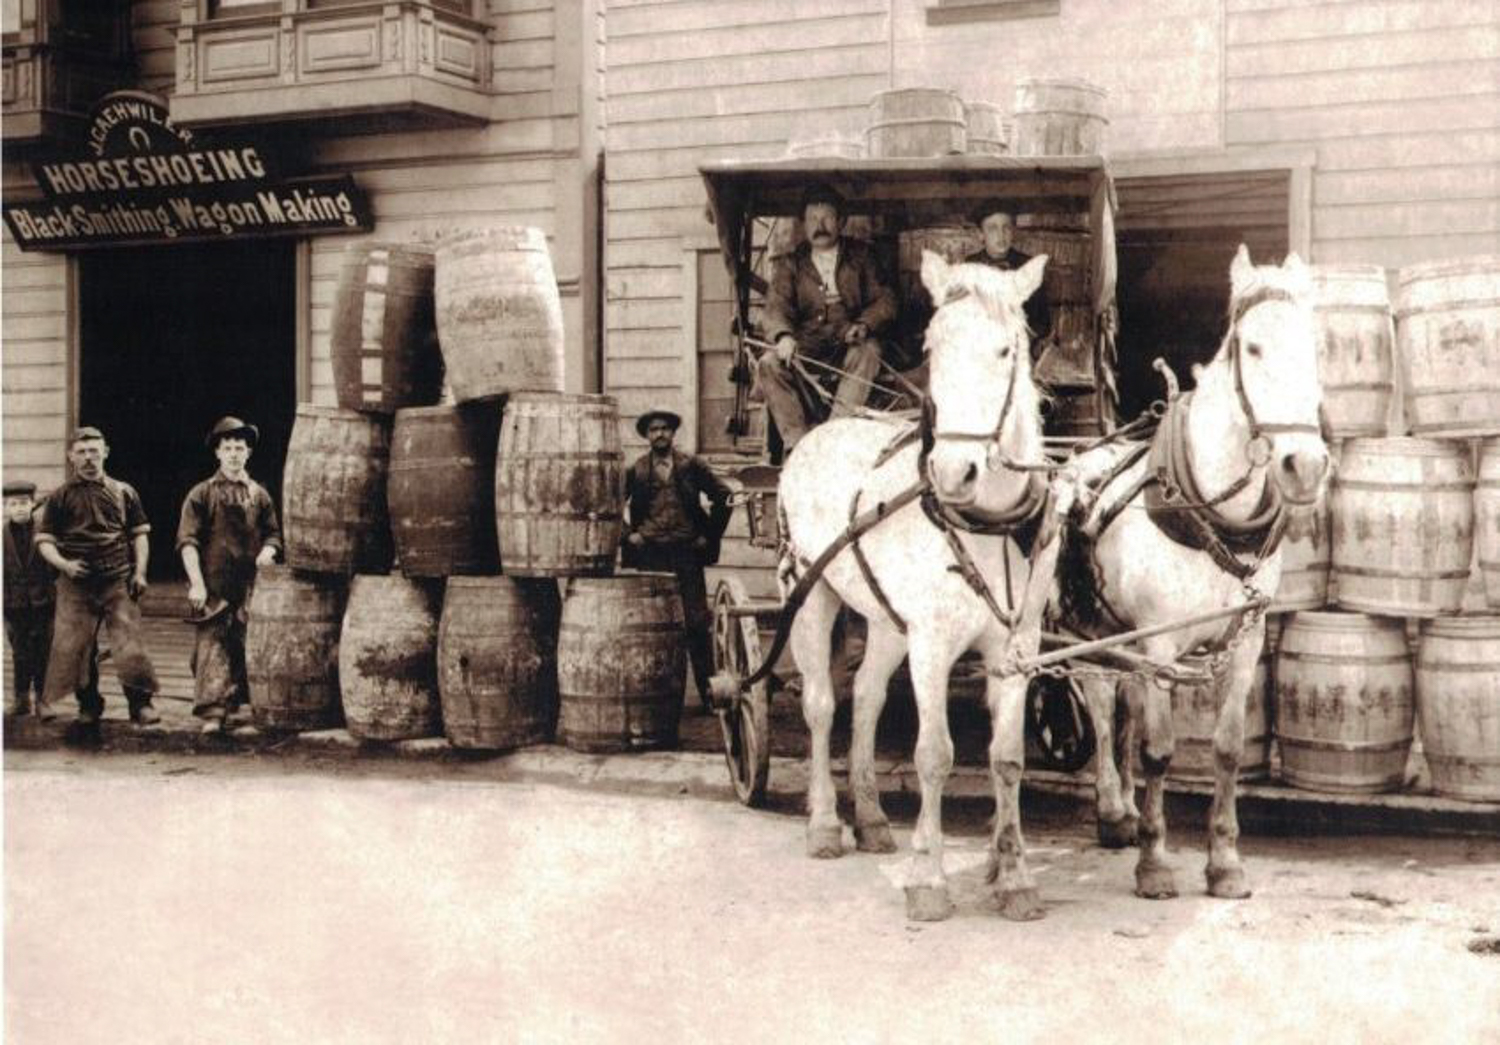 3067 23rd street, circa 1903, location of John Gaehwiler's blacksmith business. Photo courtesy Elizabeth Creely via Mission Local